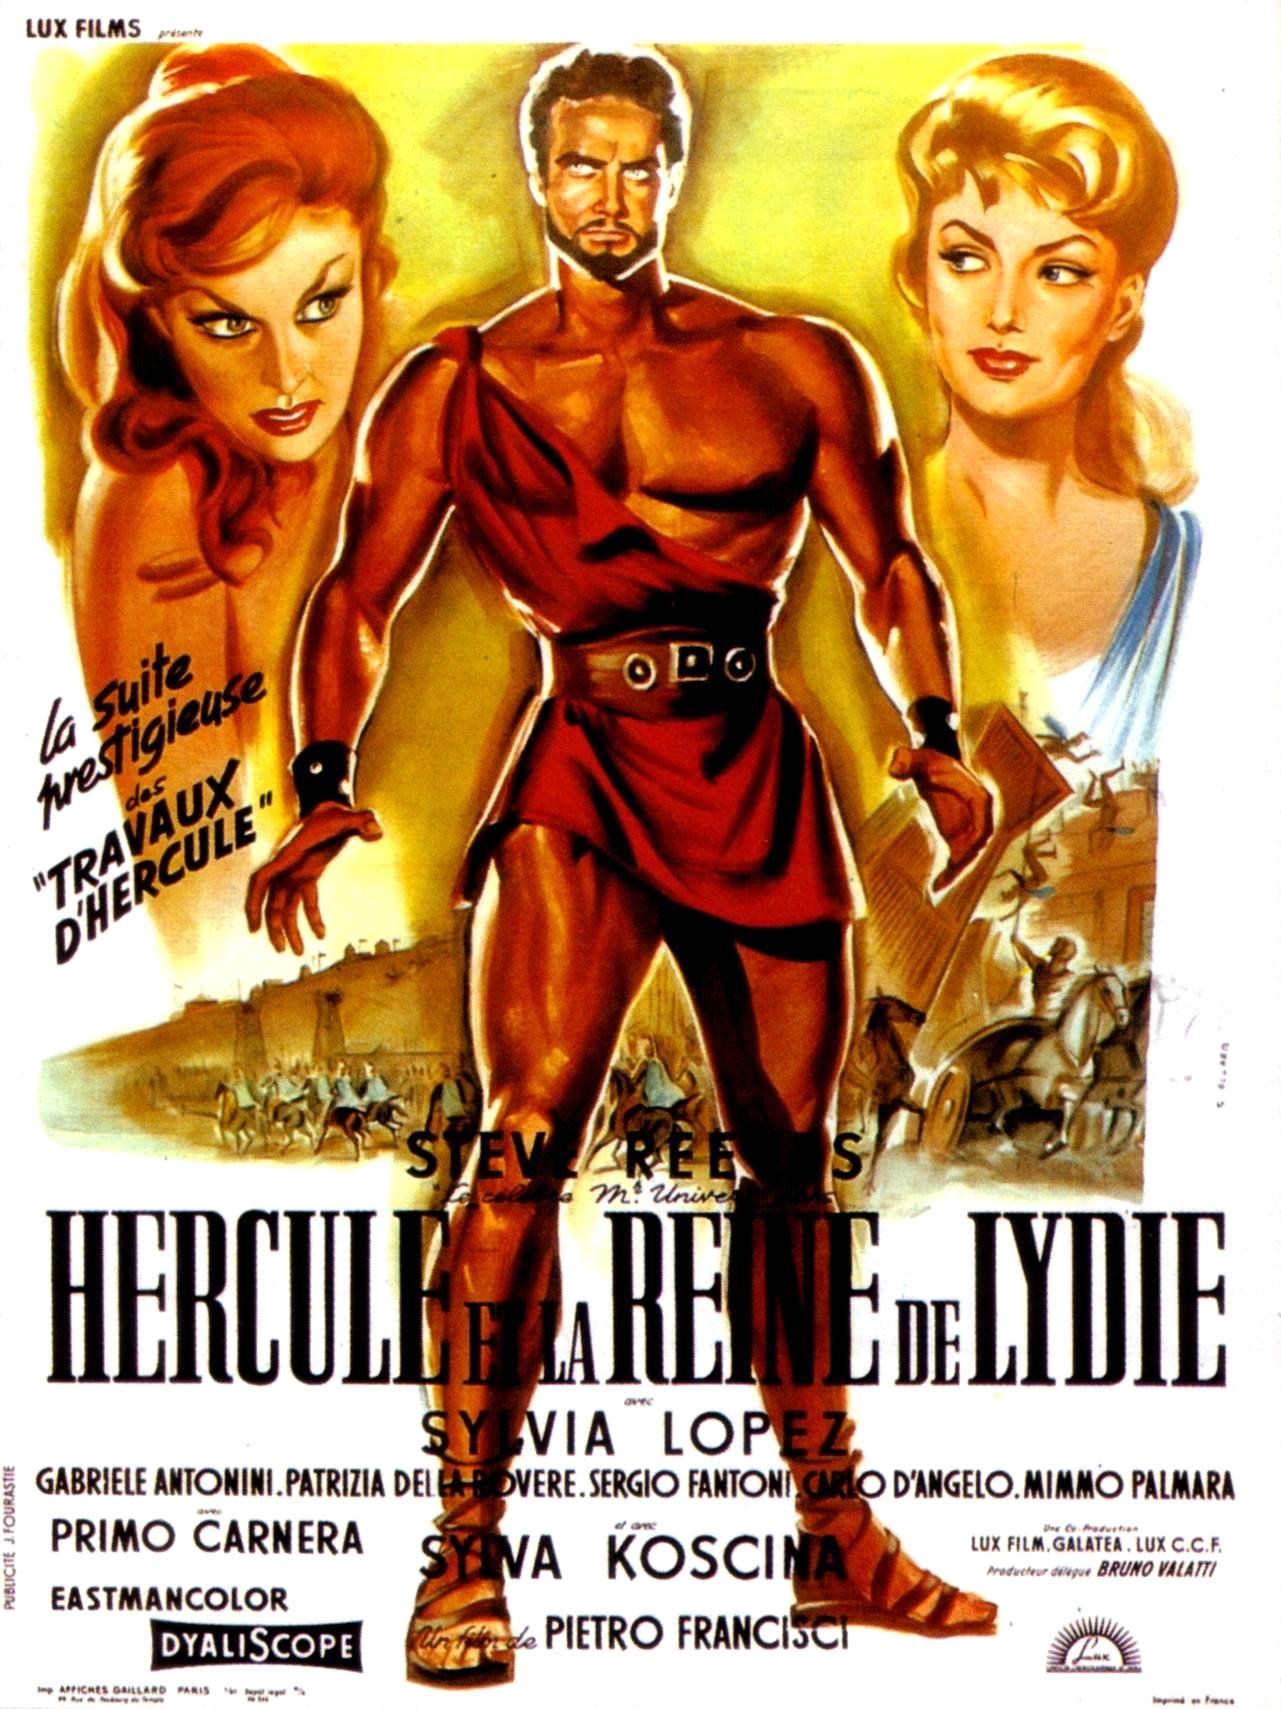 Hercules Unchained (1959)